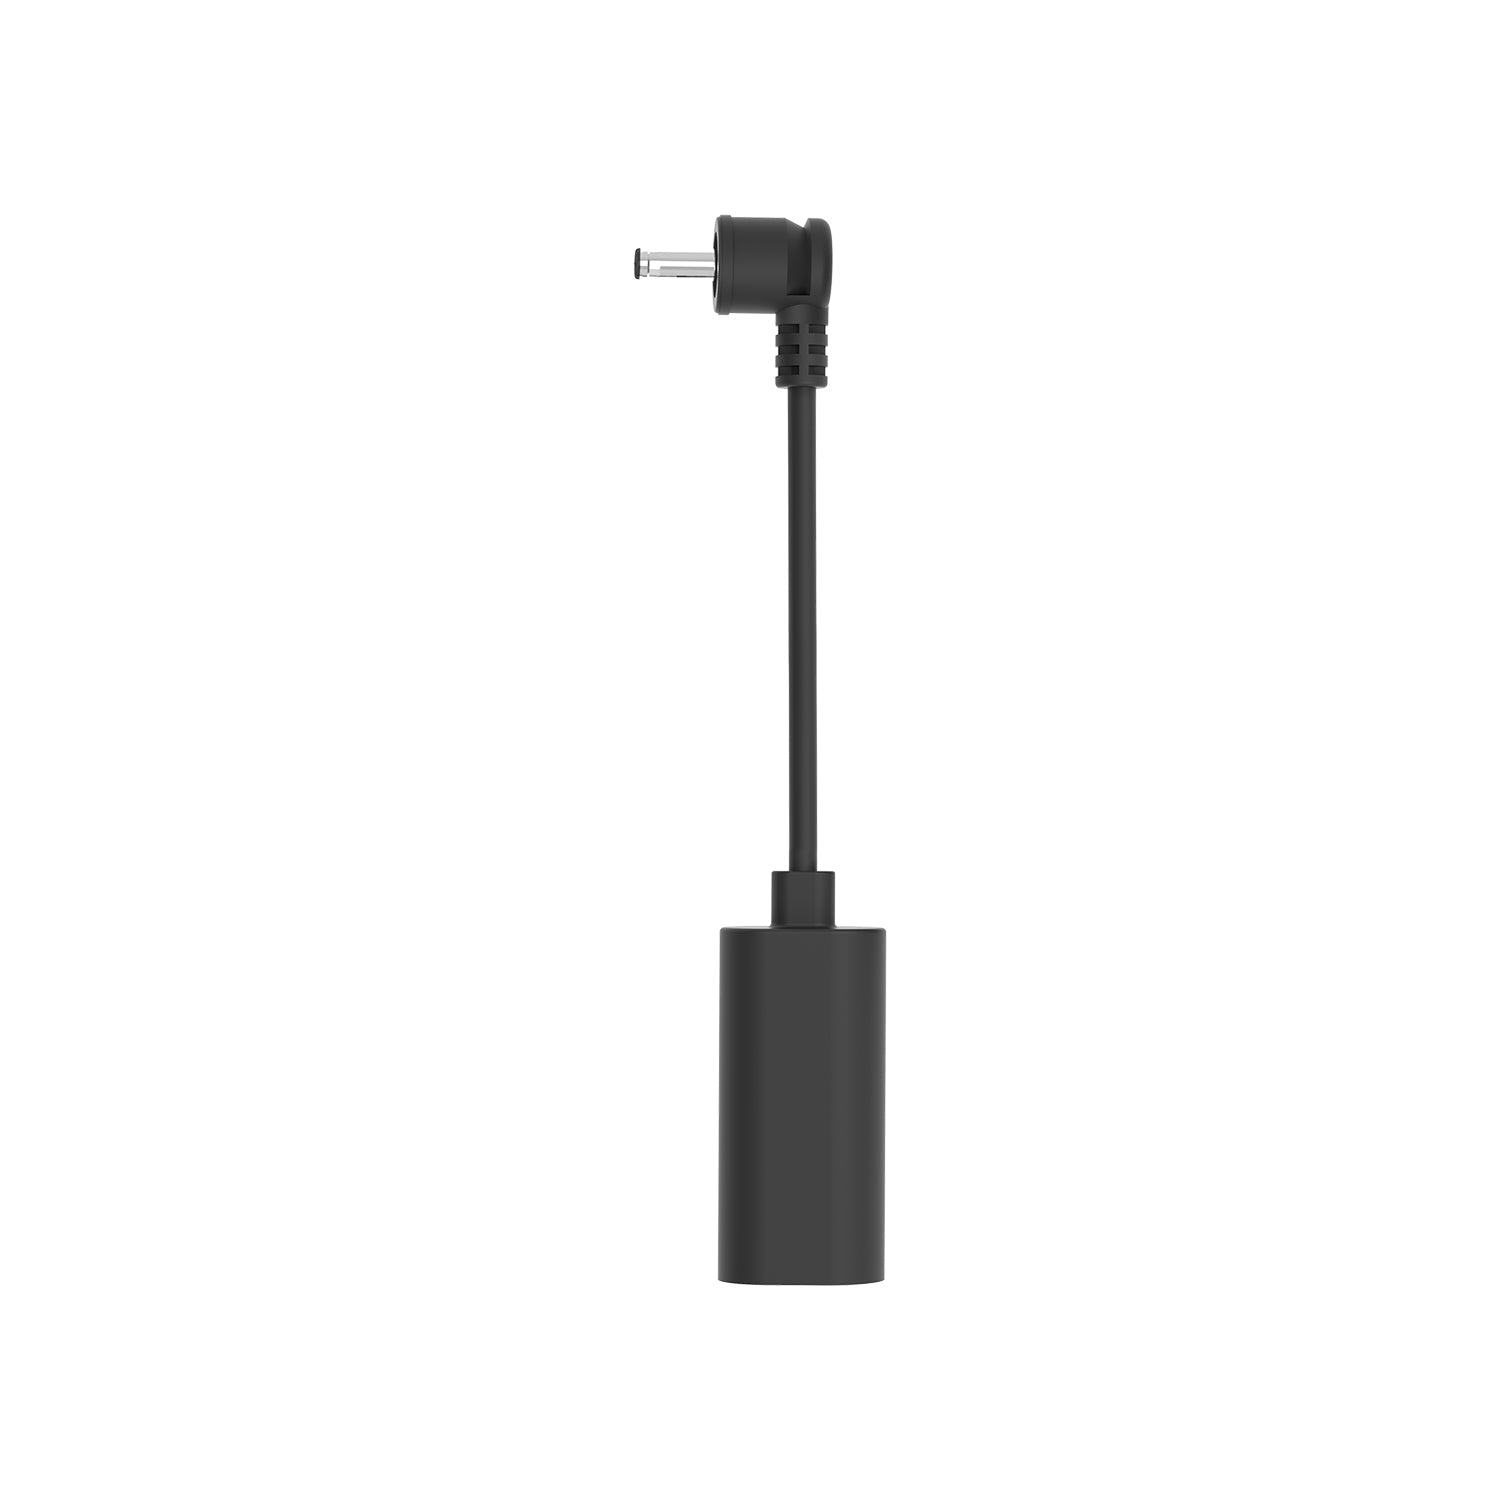 USB-C to Barrel Plug Adapter (for USB-C Solar Panels and Barrel Plug Security Cameras) - Black